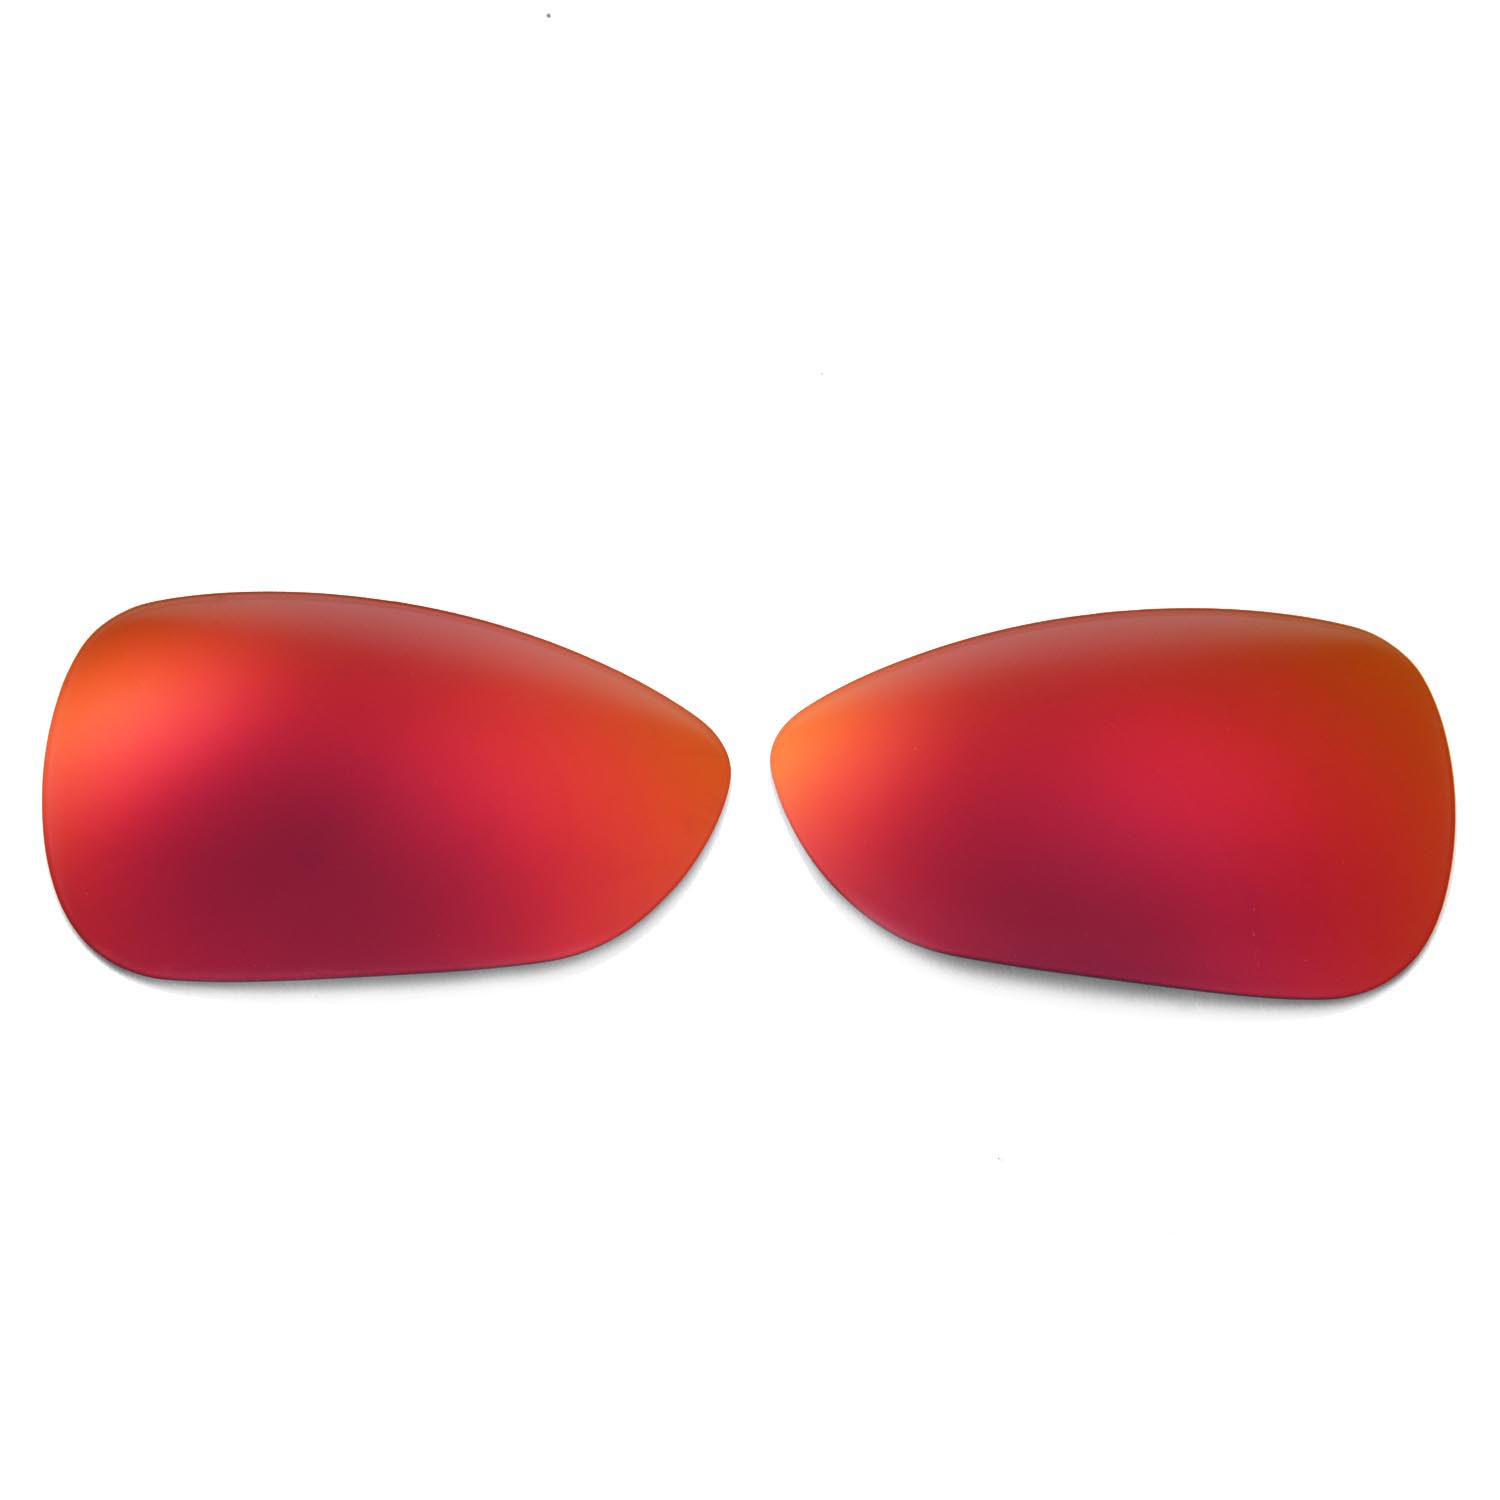 2021 cheap price various shapes sunglasses lenses eyewear polarized lens